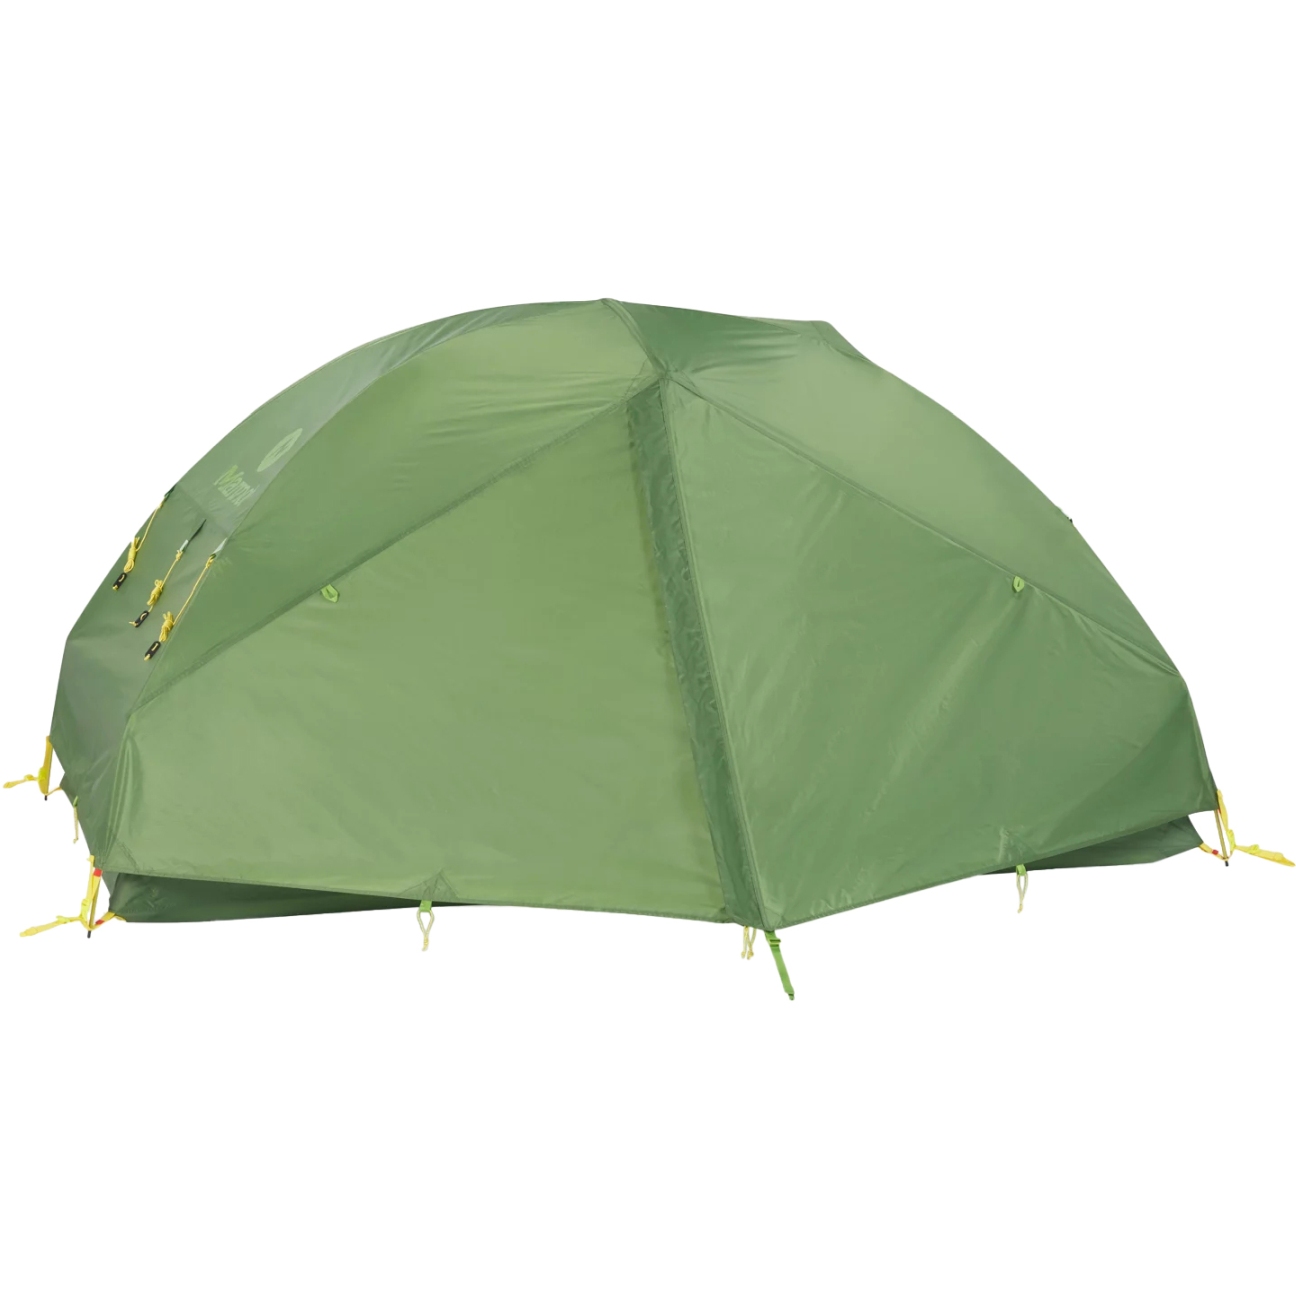 Productfoto van Marmot Vapor 2P Tent - foliage